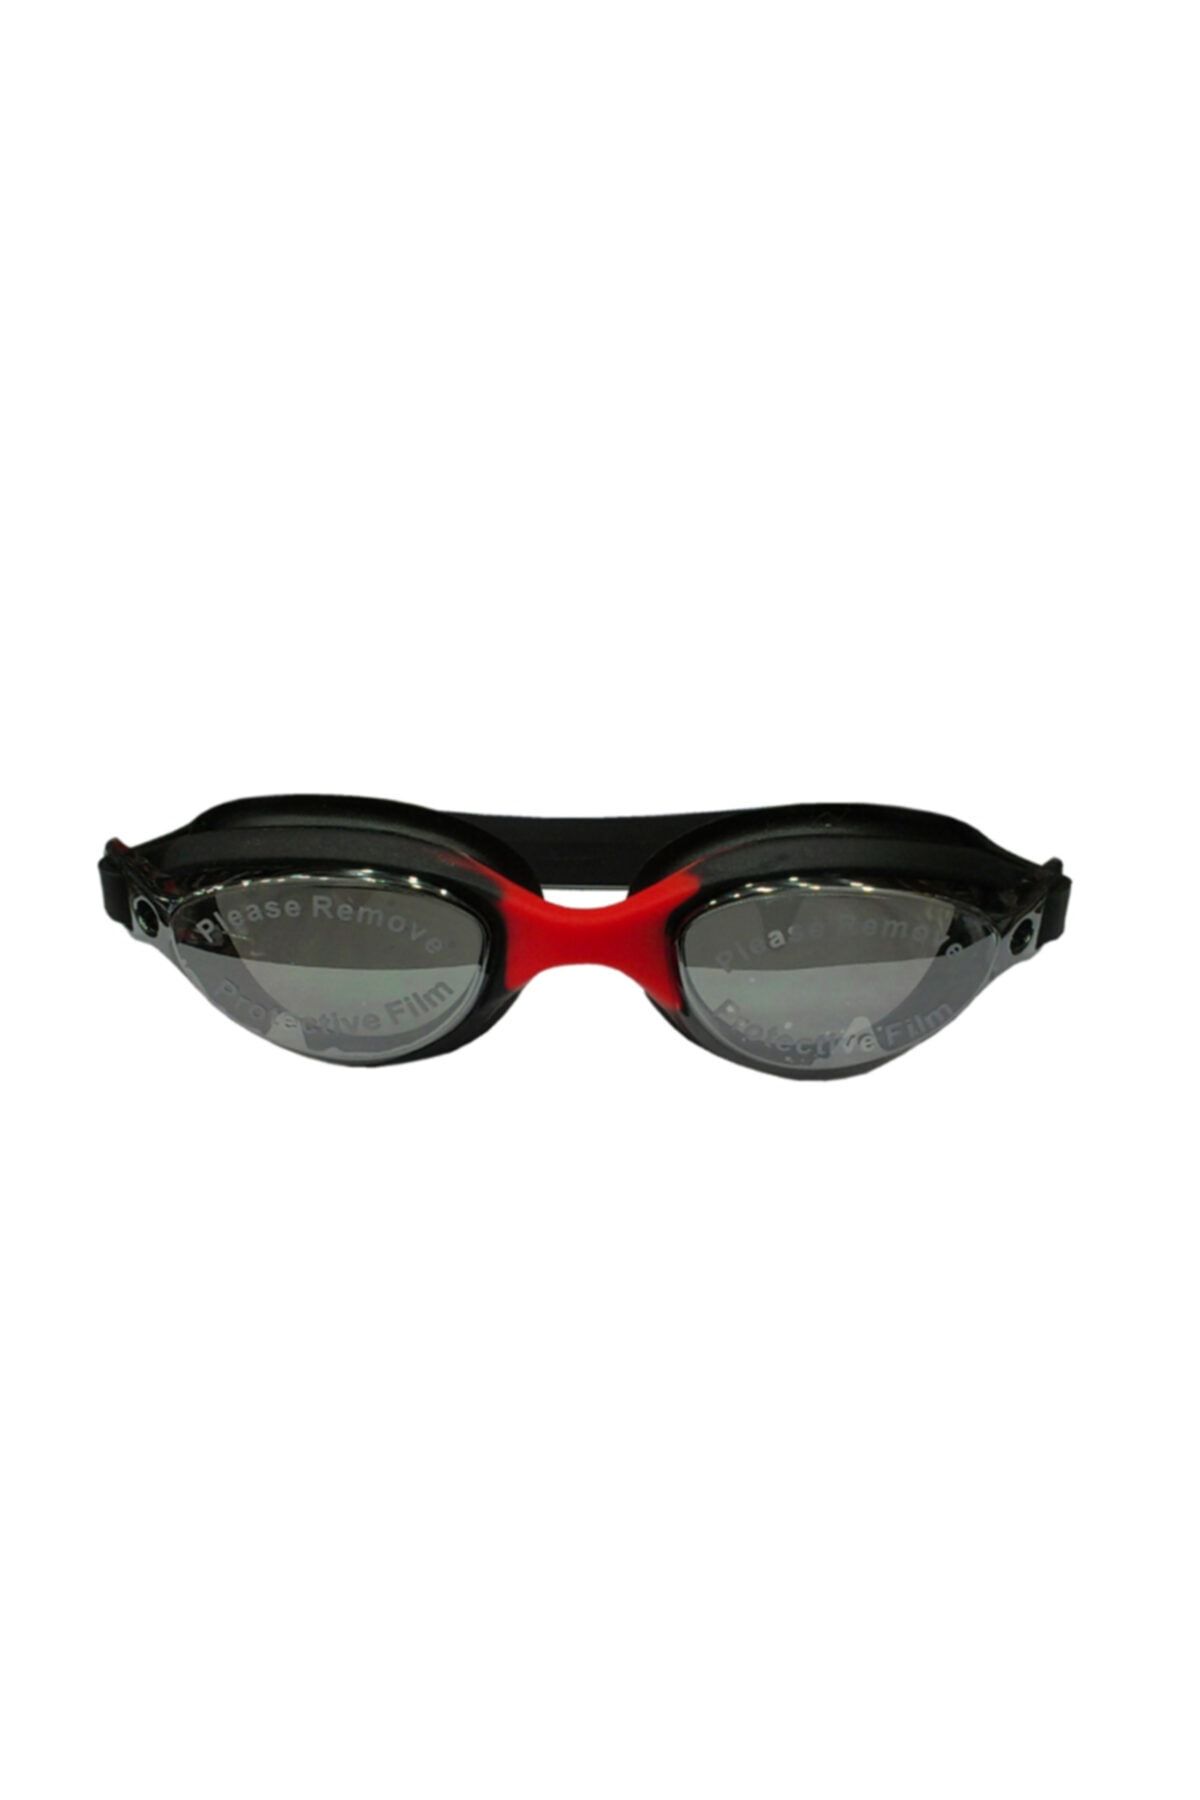 SELEX Yüzücü Gözlüğü Sg-5100